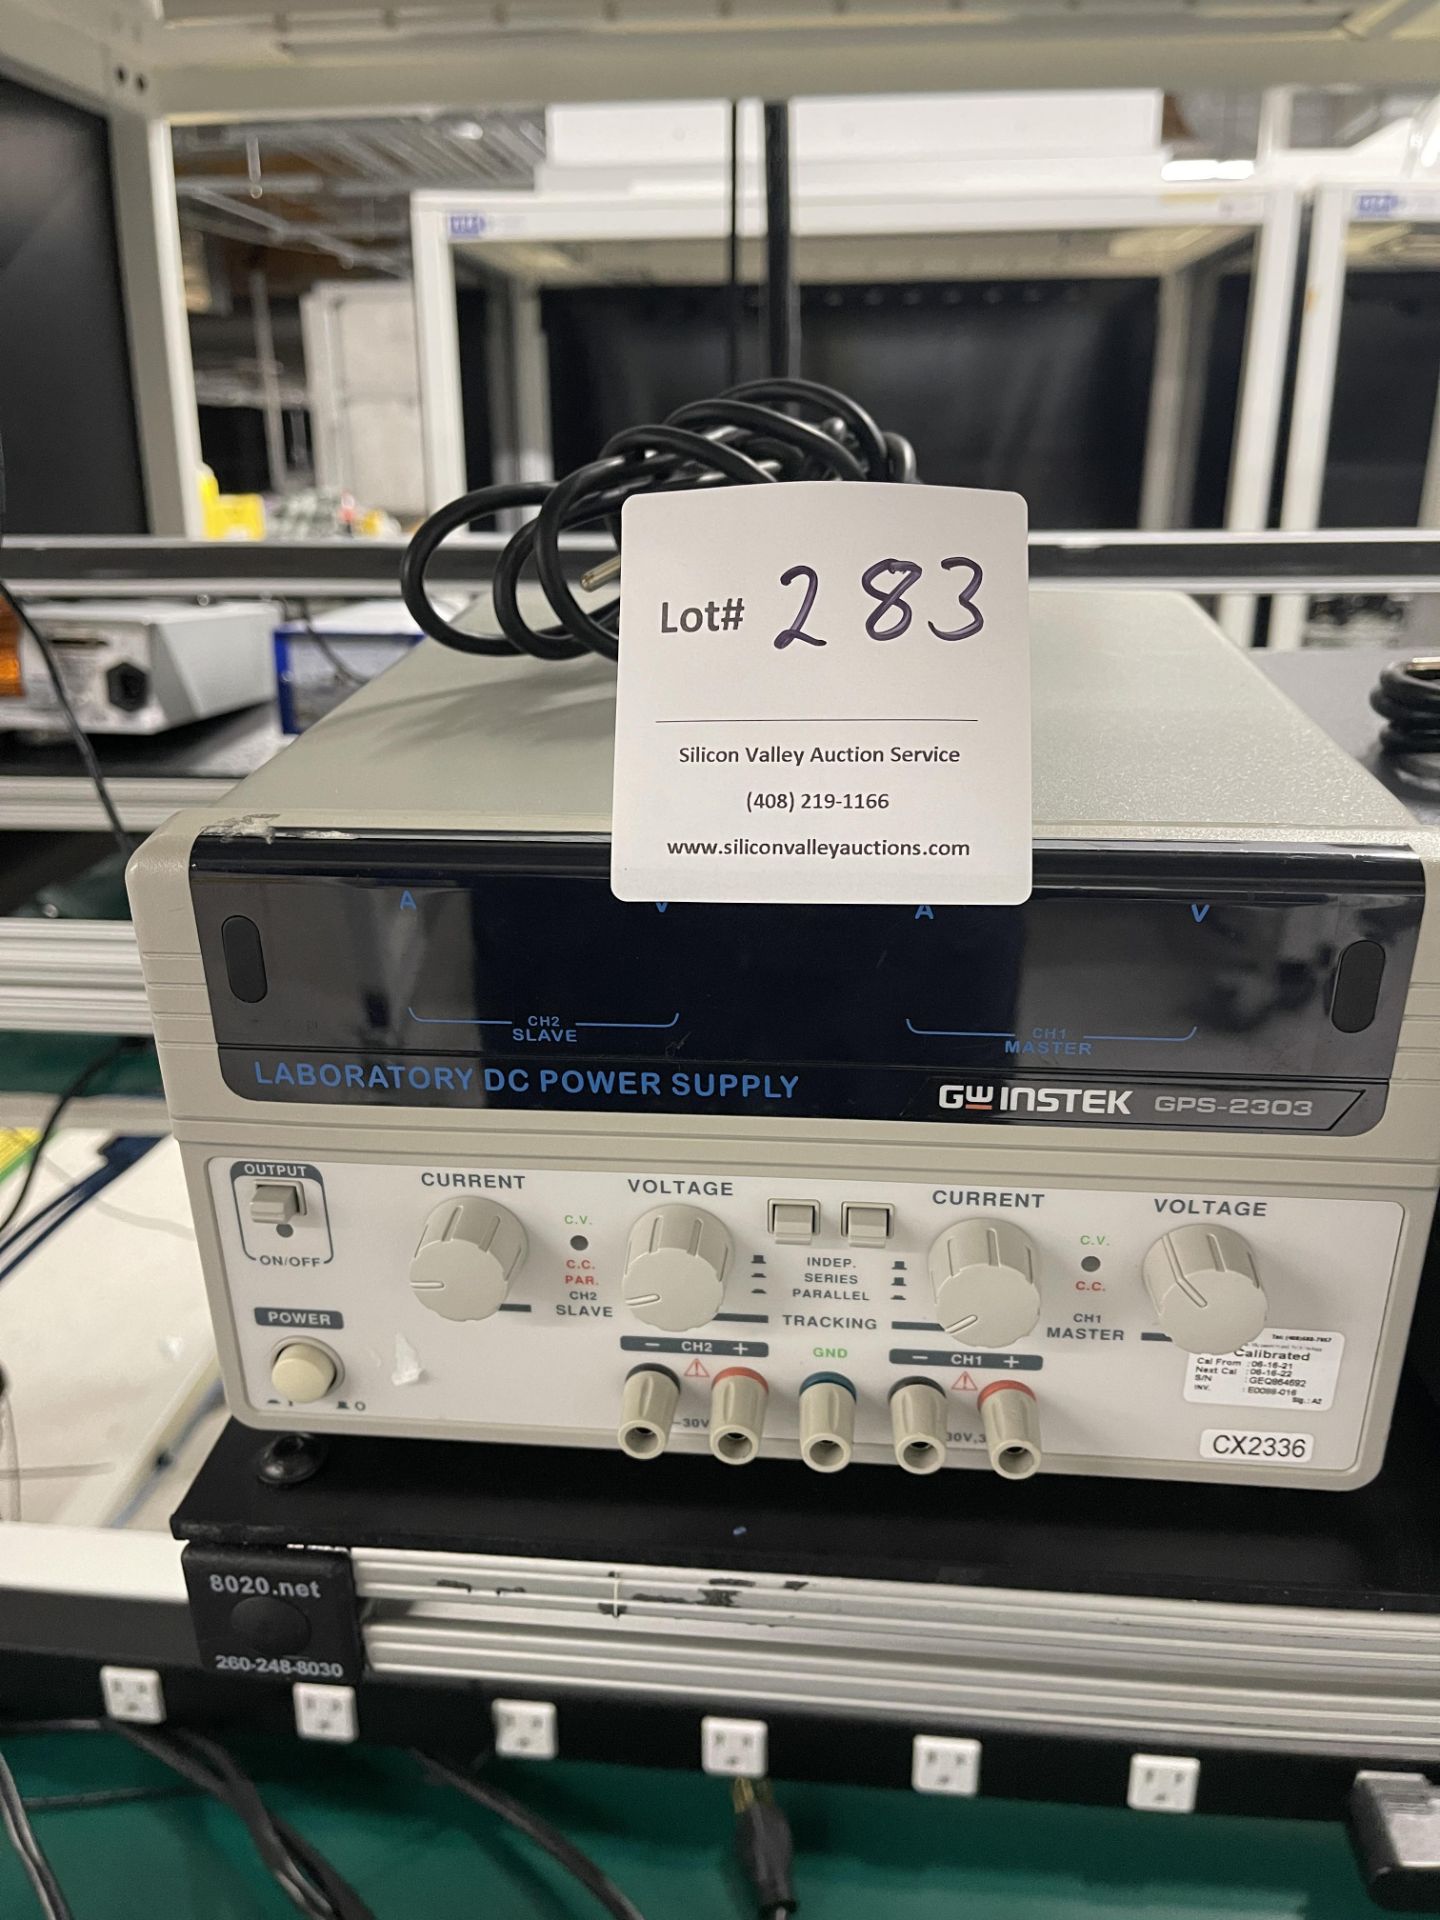 GW Intek GPS-2303 Laboratory DC Power Supply